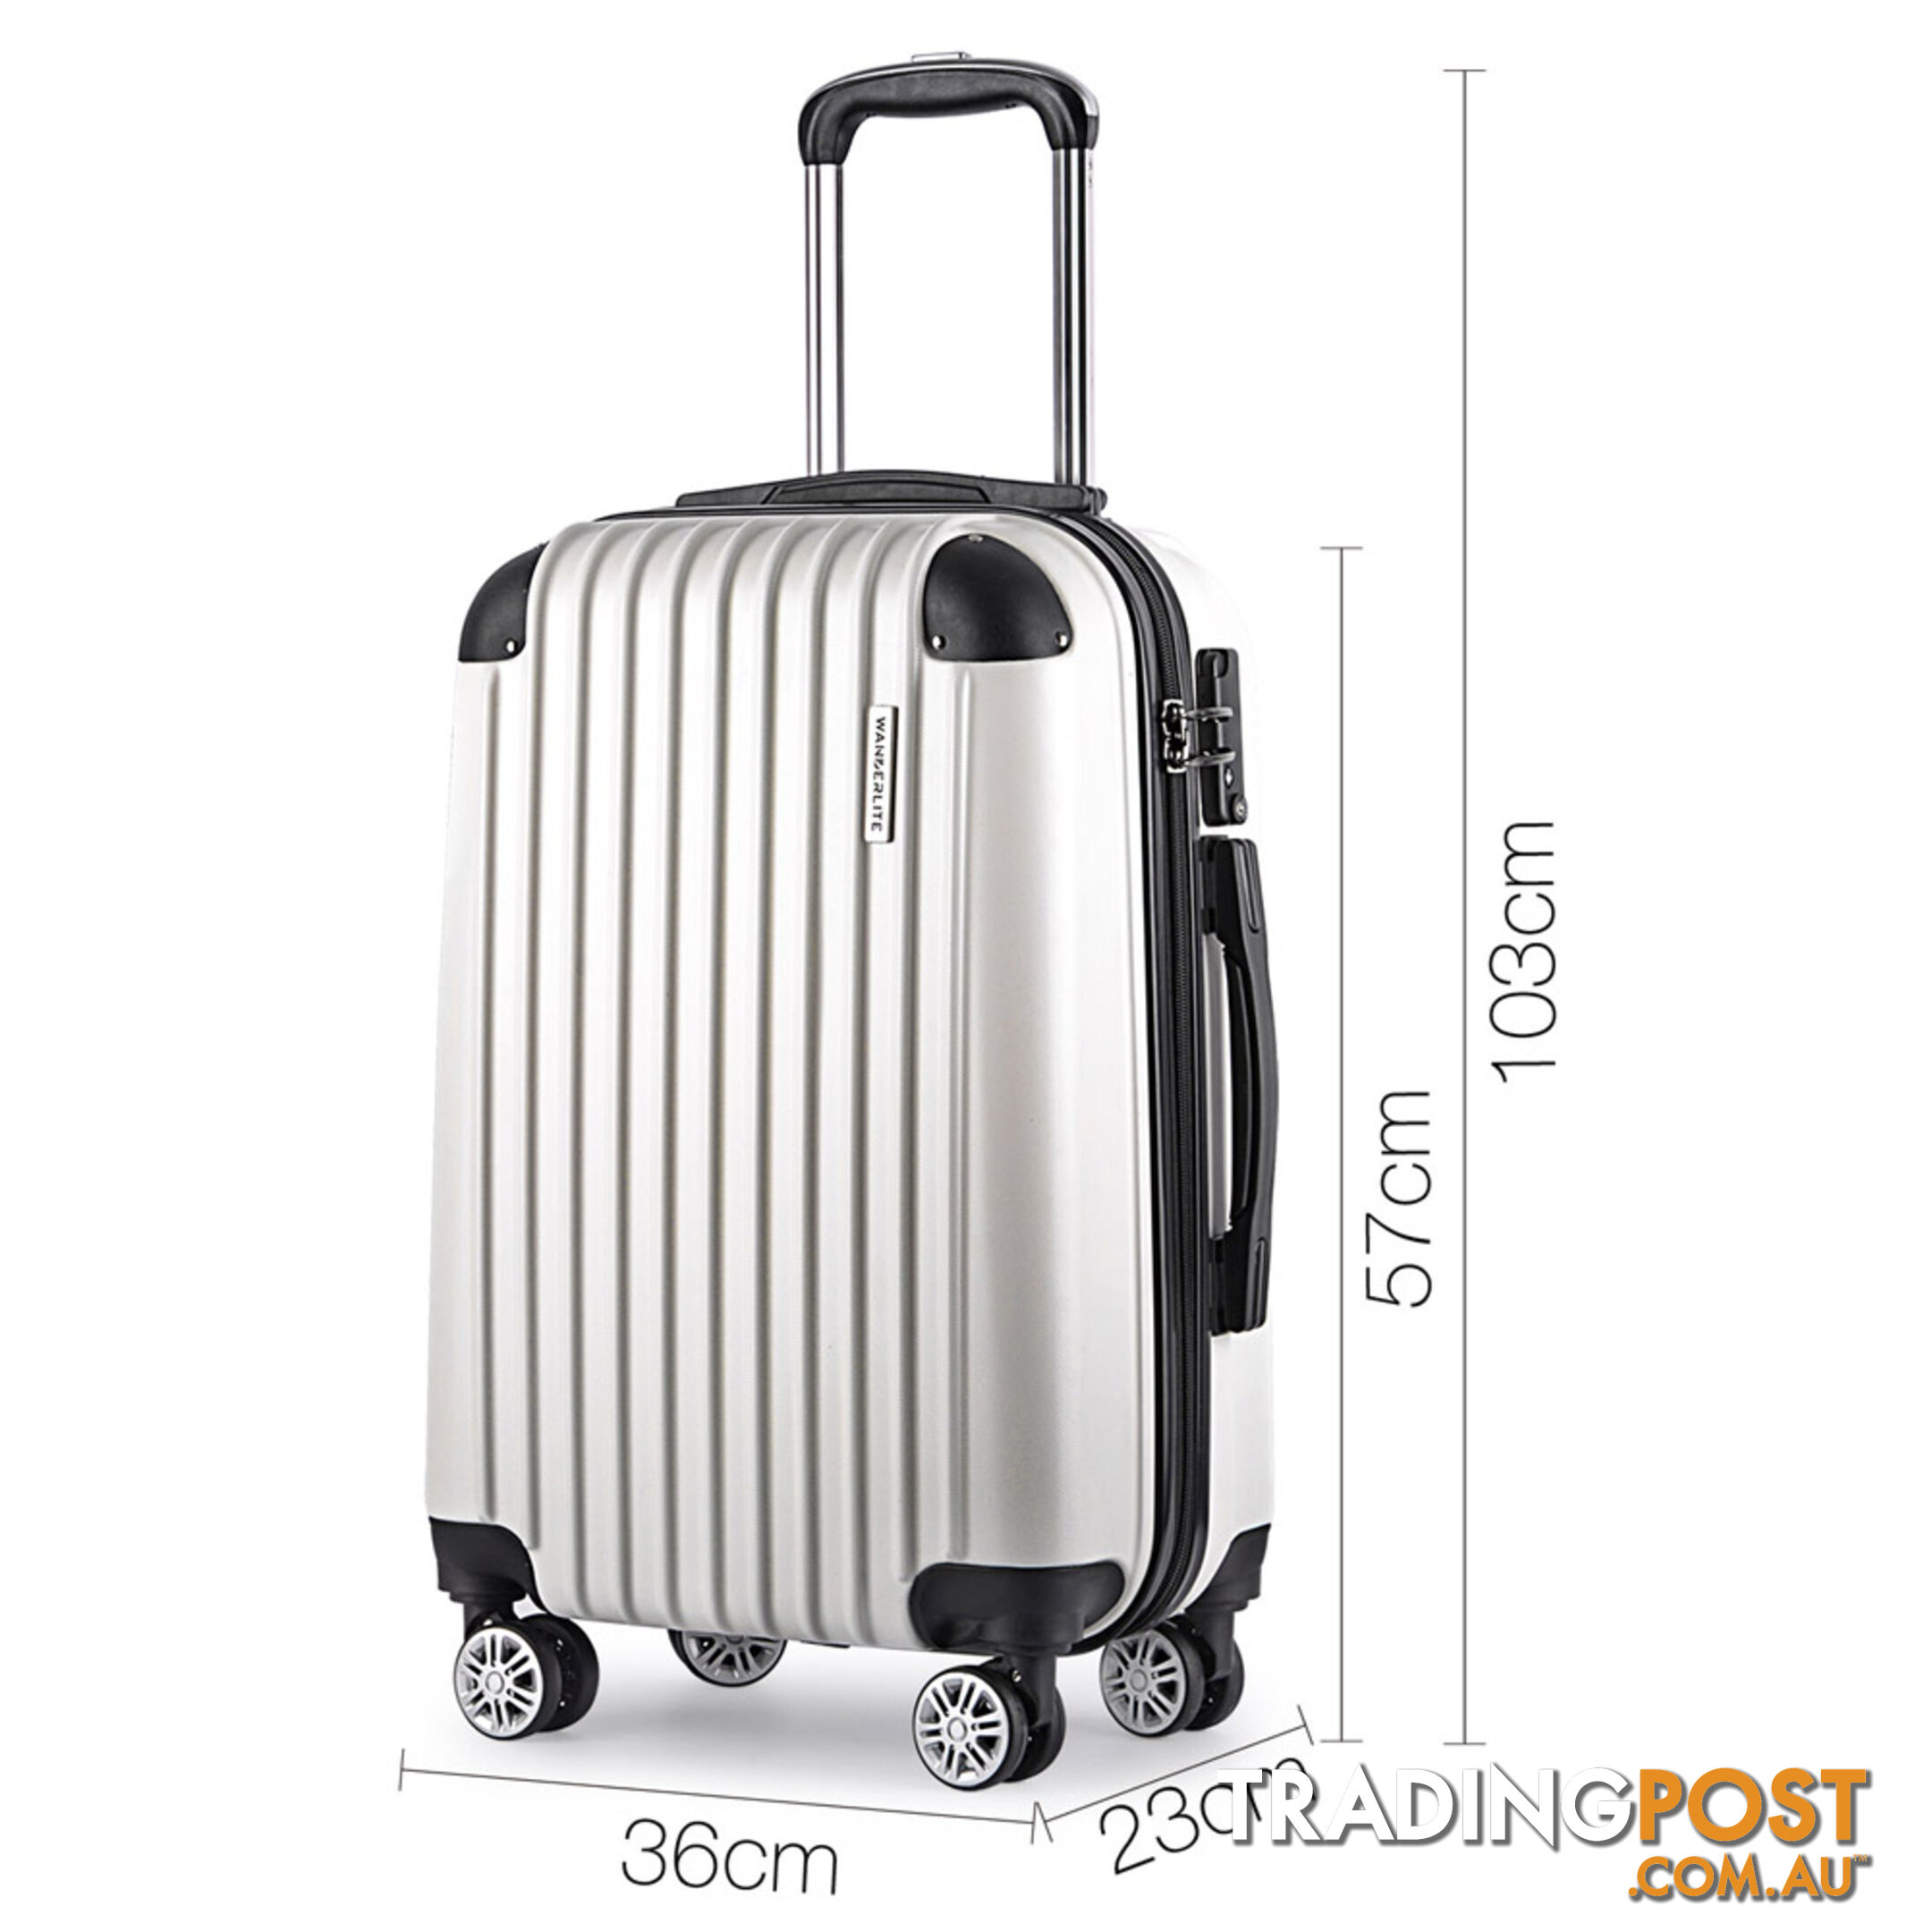 Set of 3 Hard Shell Travel Luggage with TSA Lock - White